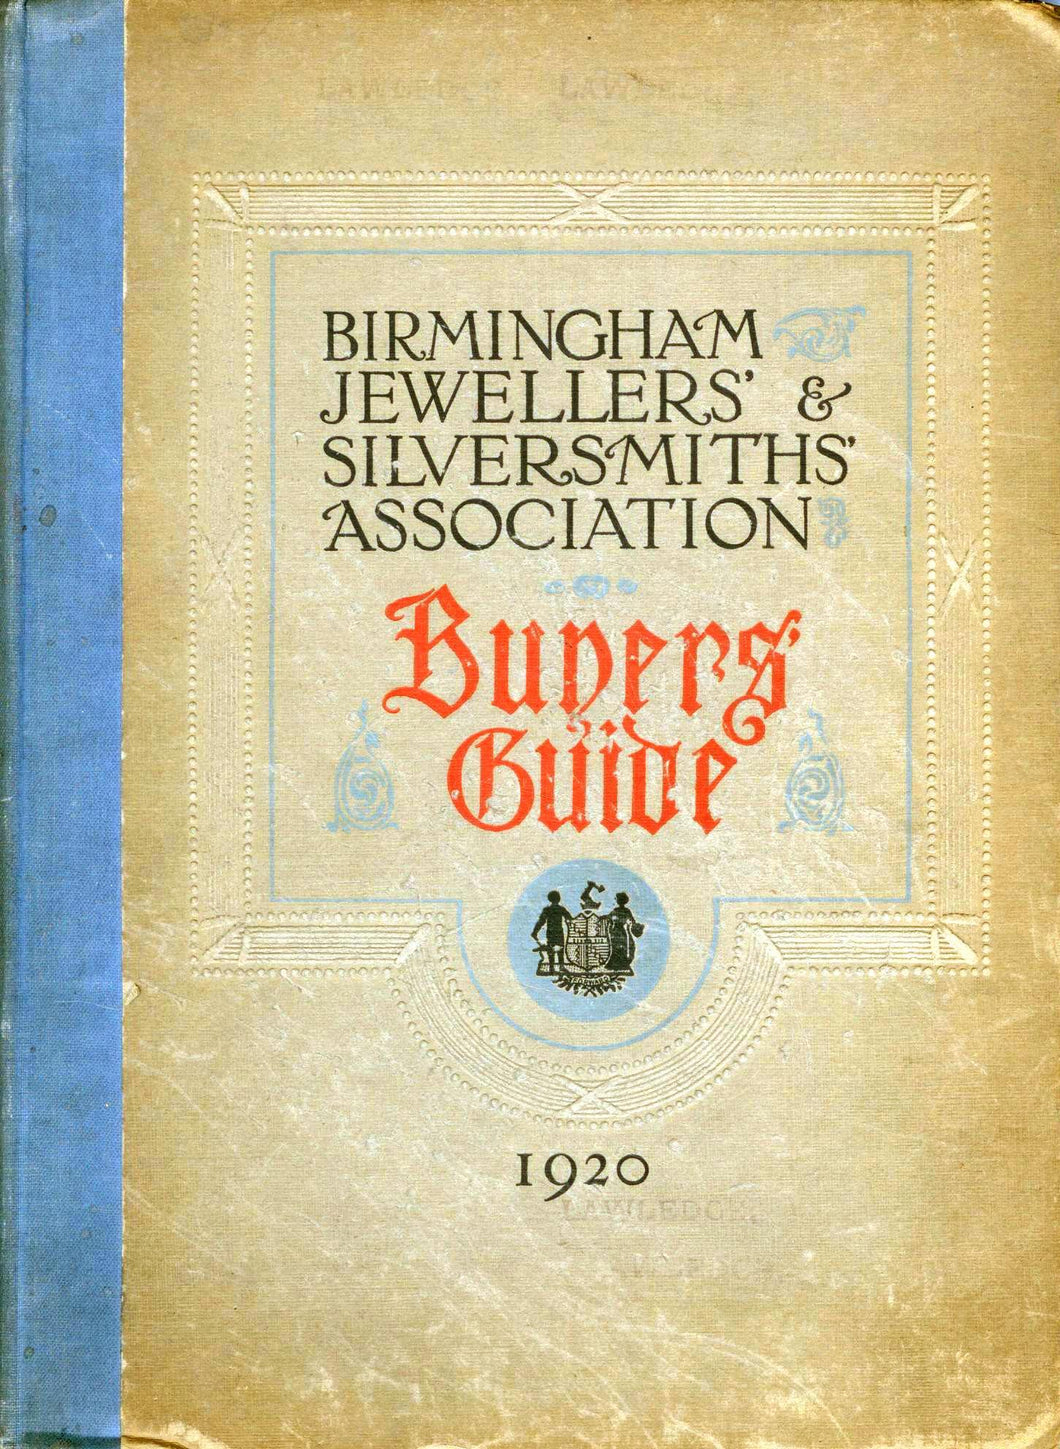 Birmingham Jewellers' & Silversmiths' Association Buyers' Guide 1920